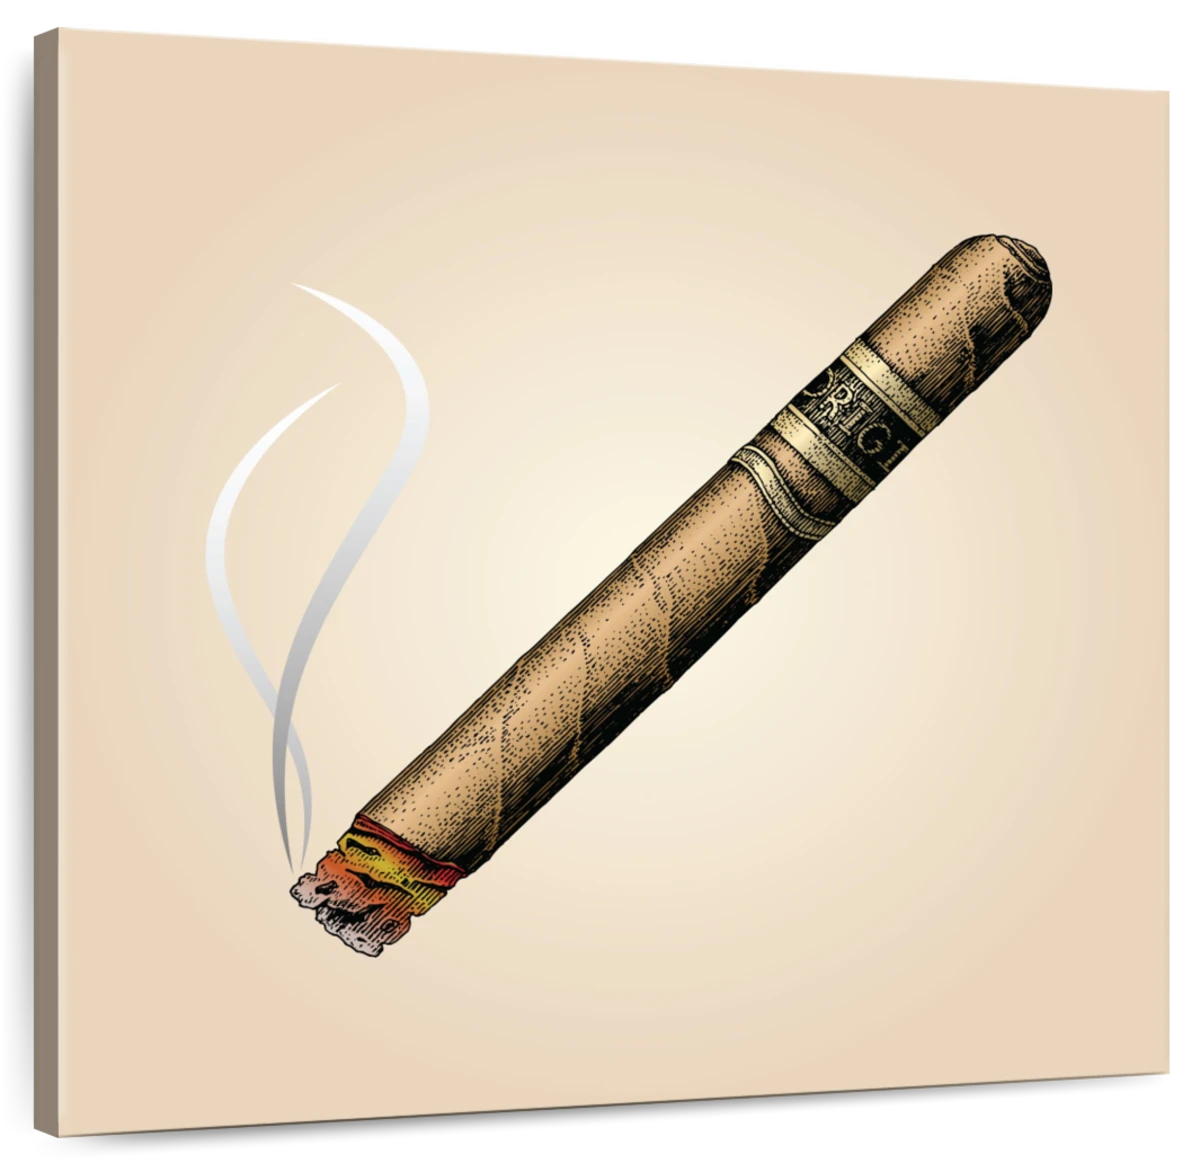 cigar posters